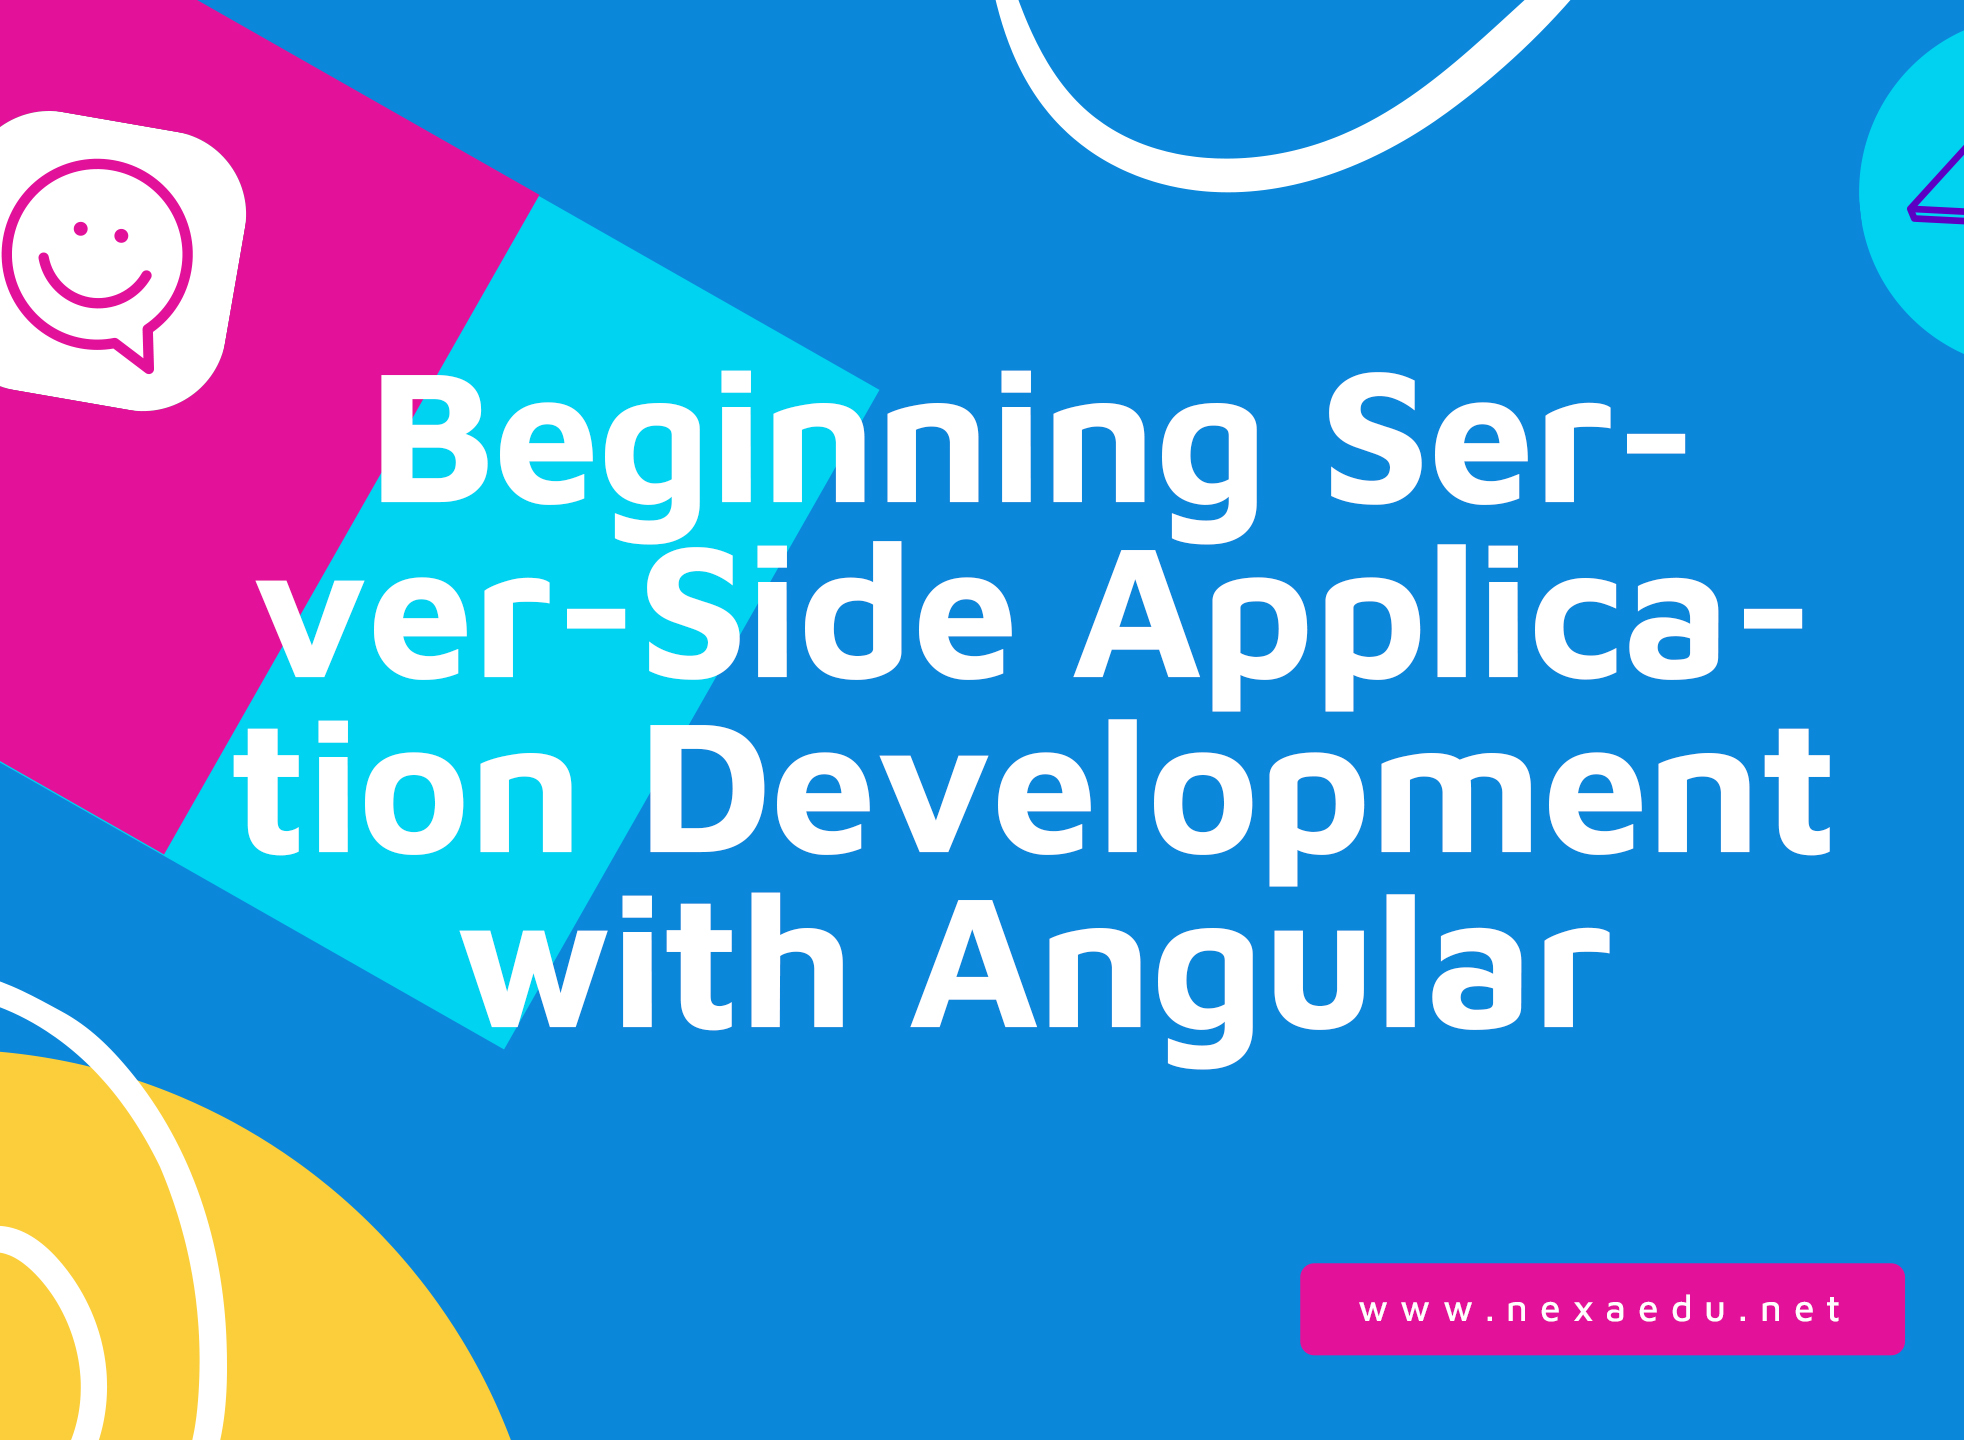 Beginning Server-Side Application Development with Angular